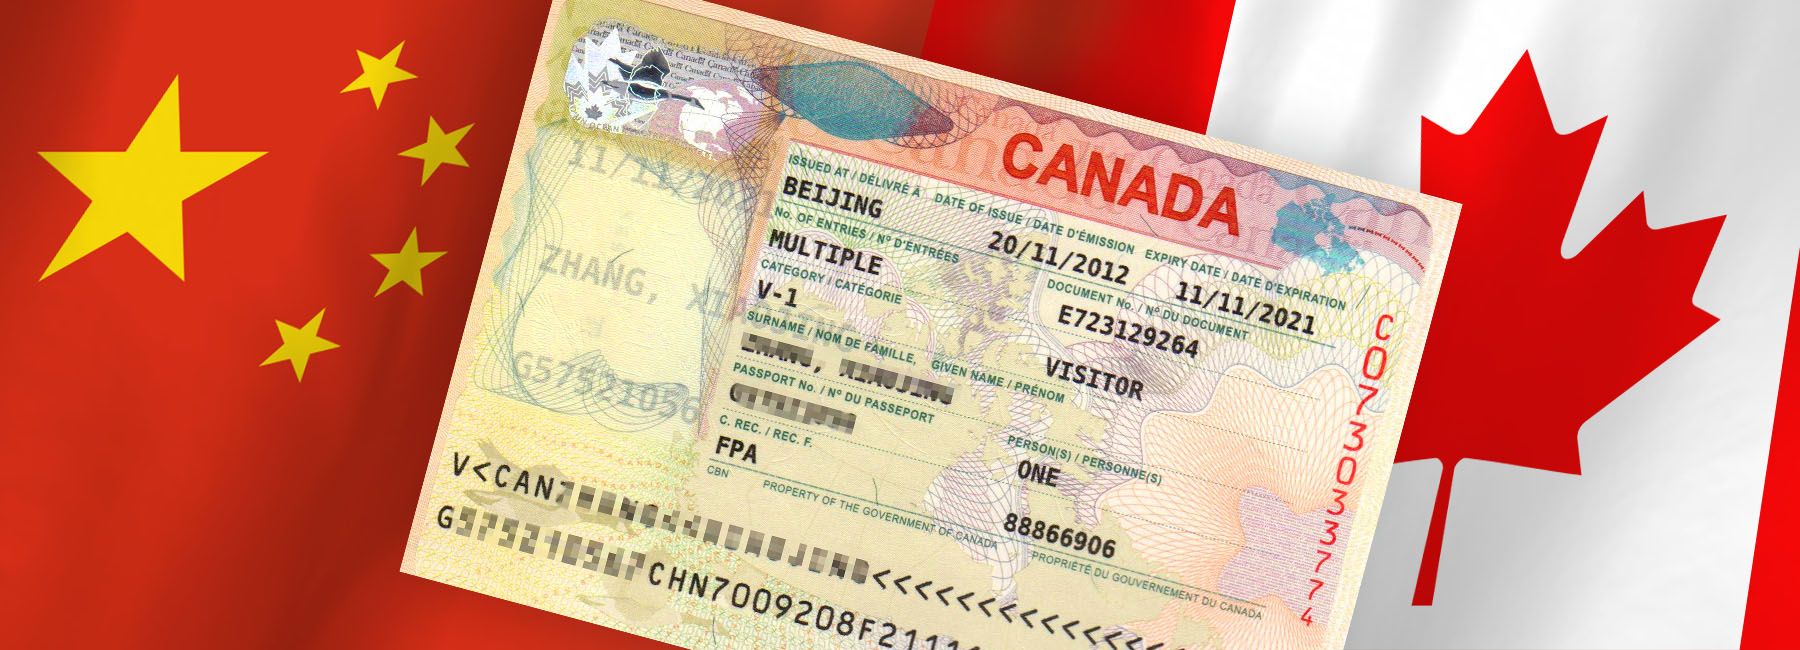 China - Canada Visa IN